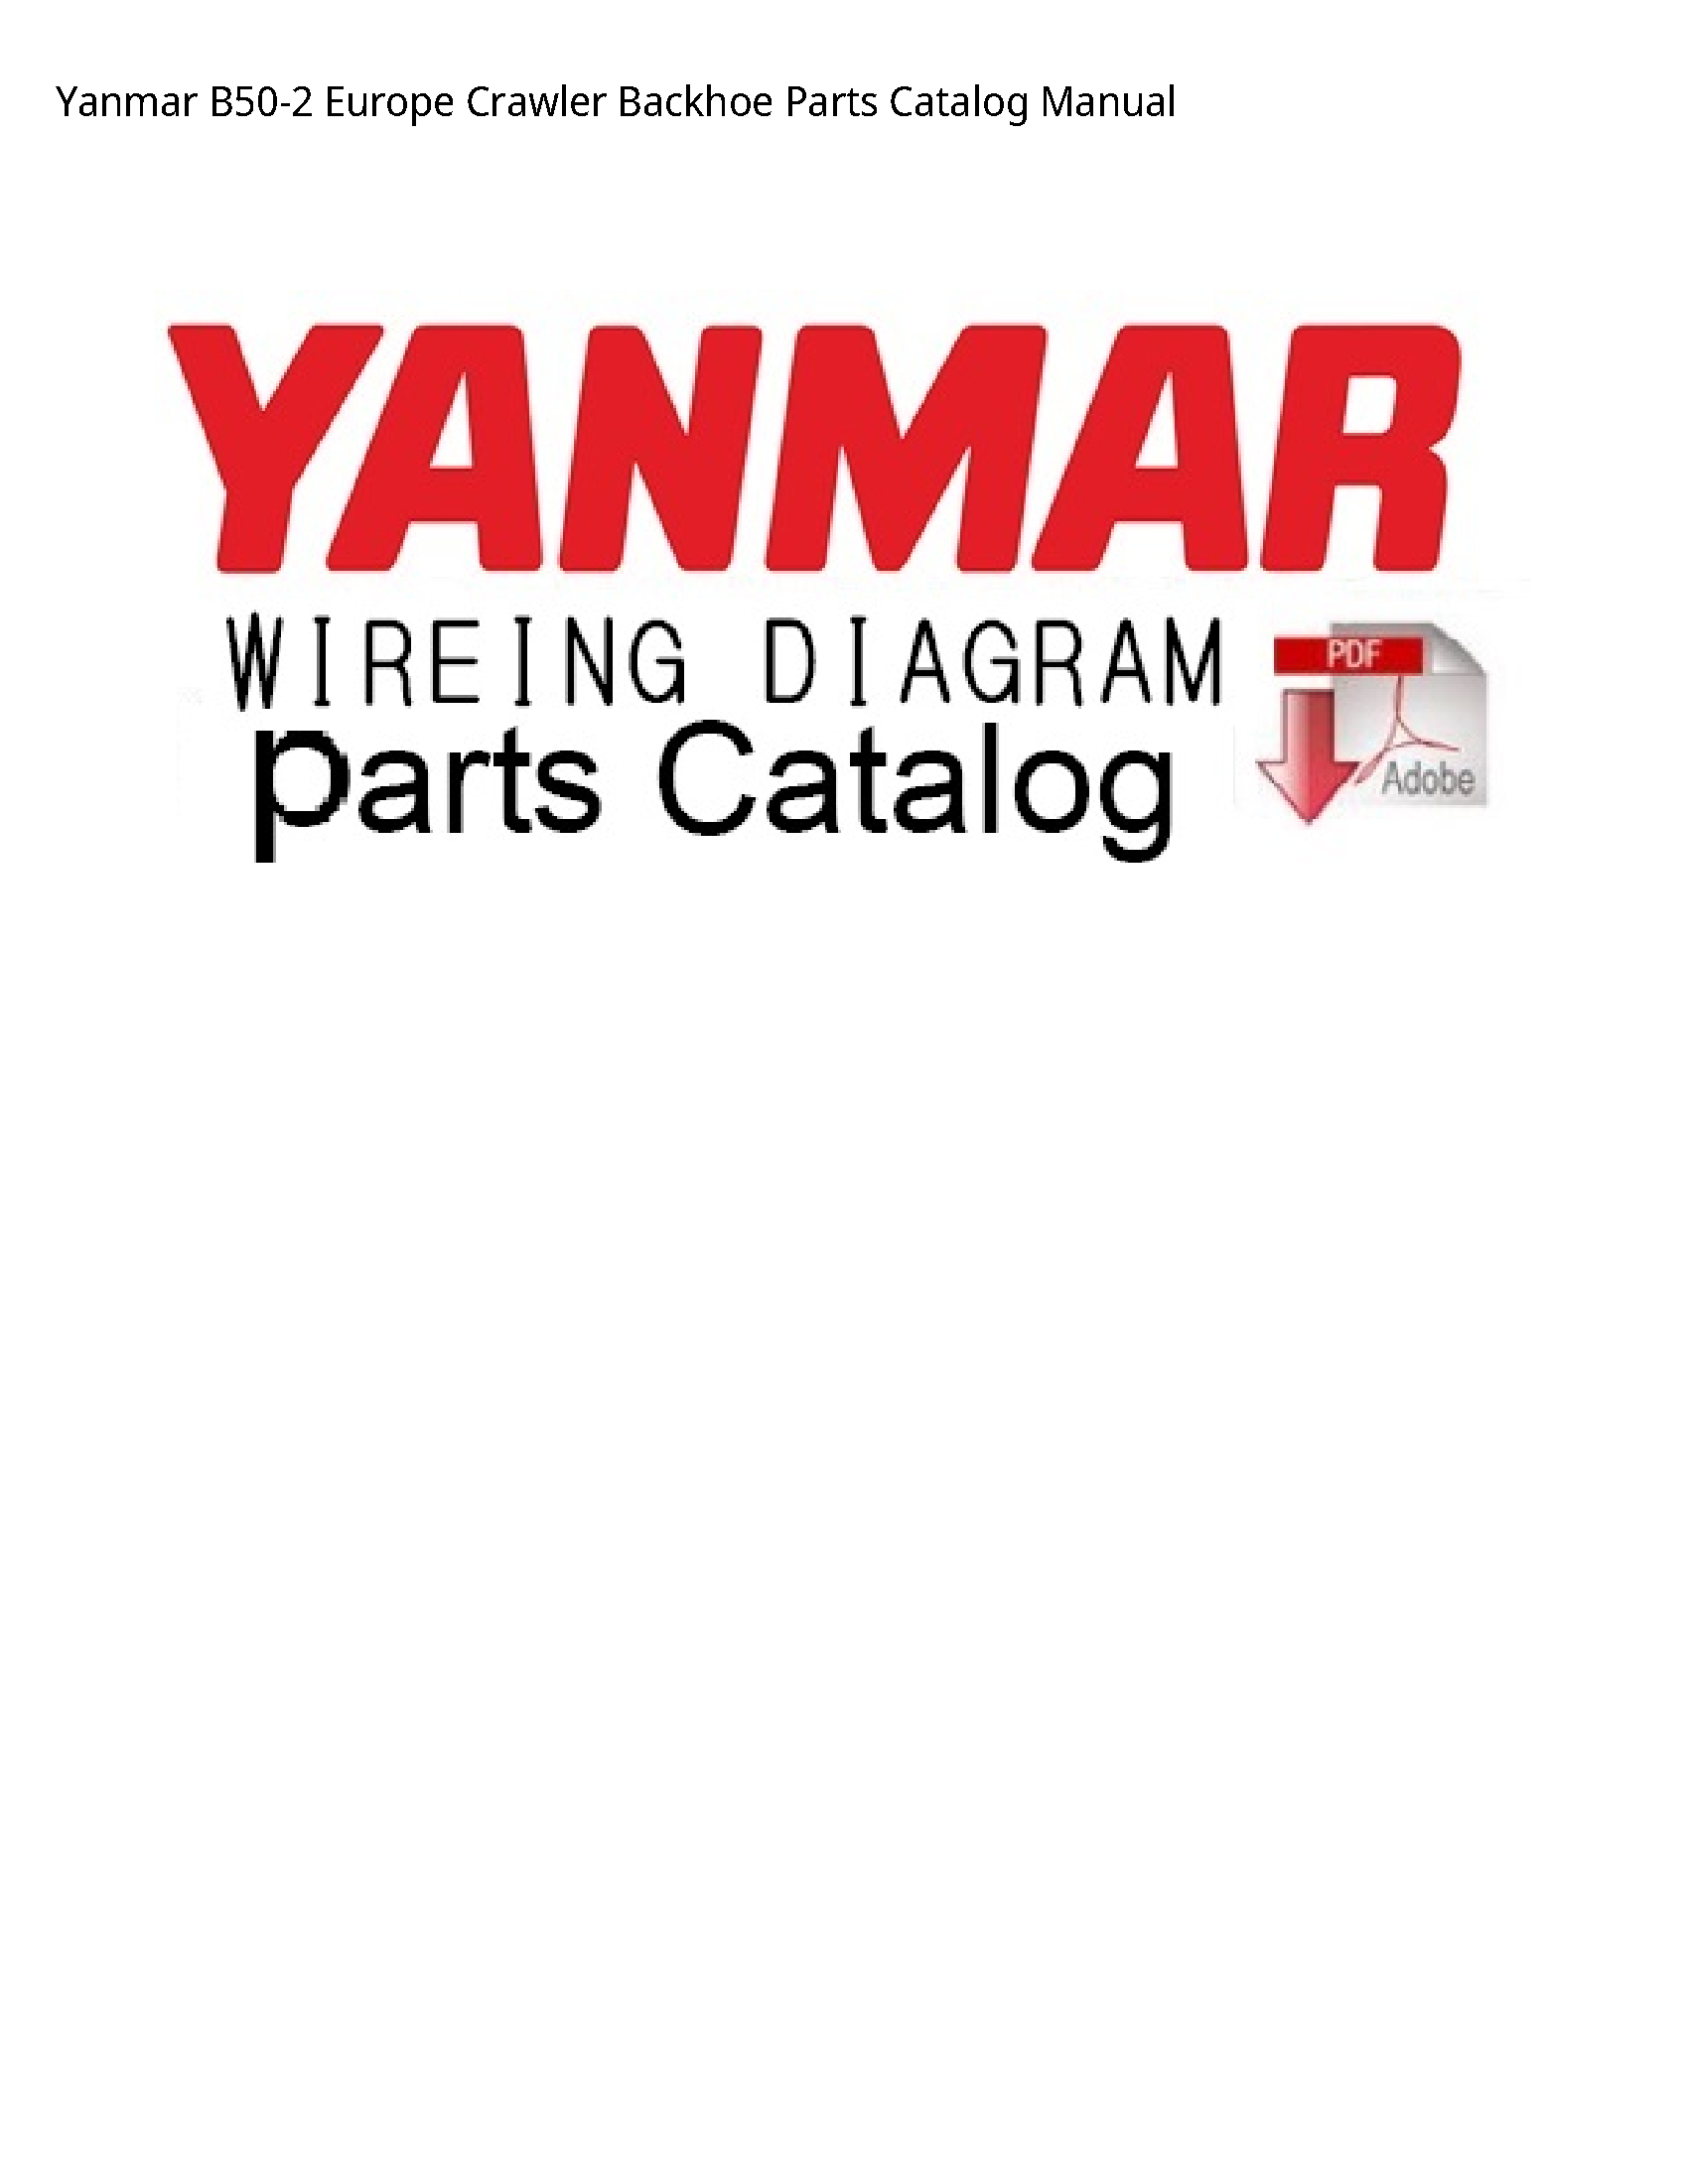 Yanmar B50-2 Europe Crawler Backhoe Parts Catalog manual